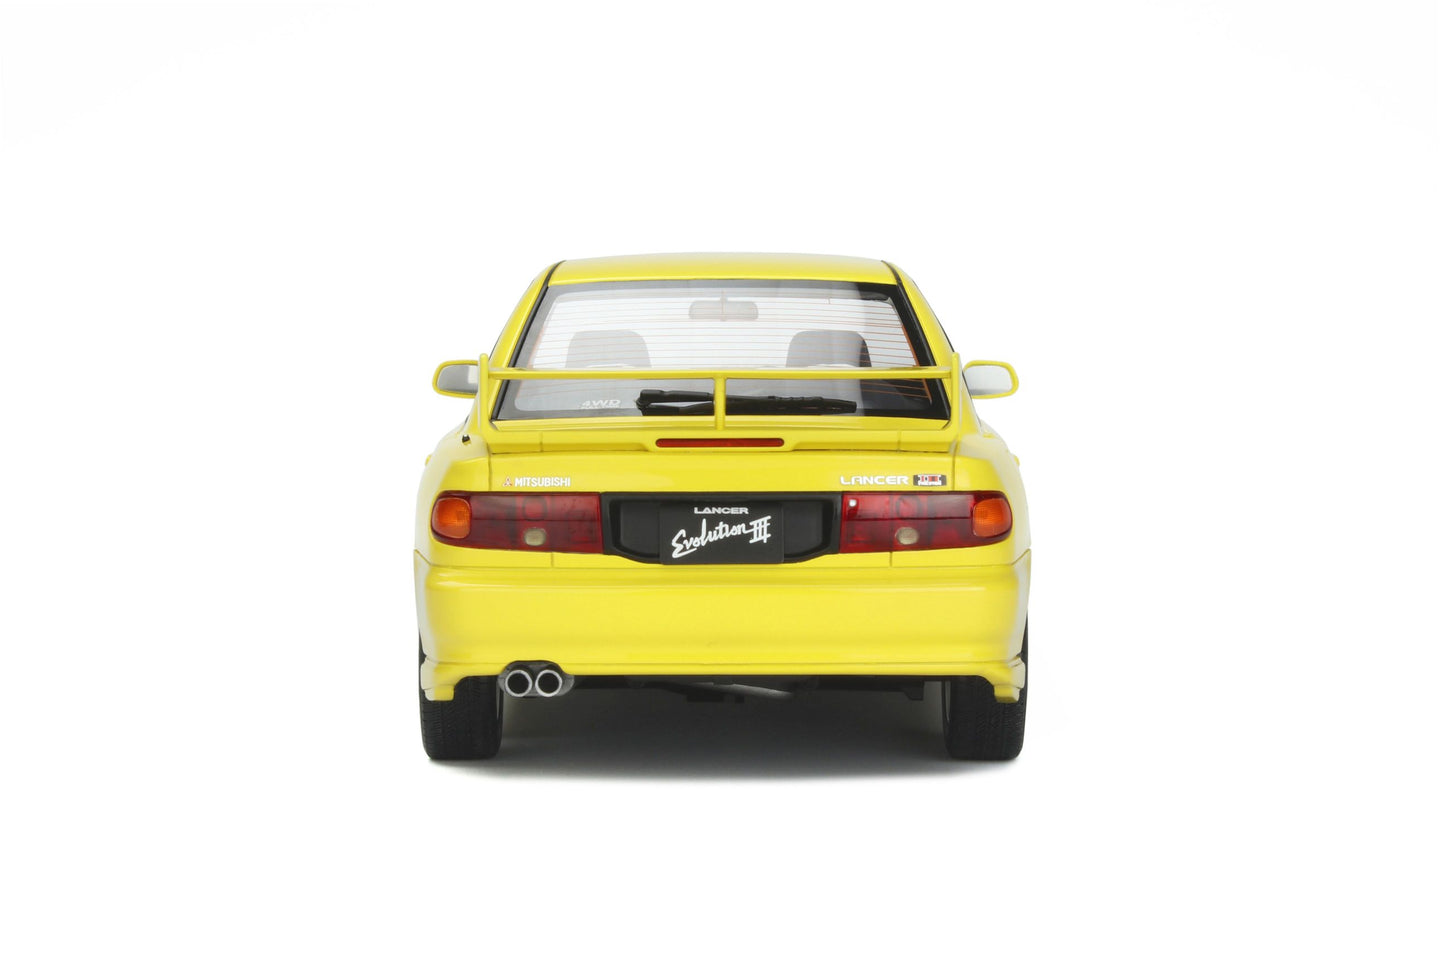 OttOmobile - Mitsubishi Lancer Evo III (Yellow) 1:18 Scale Model Car